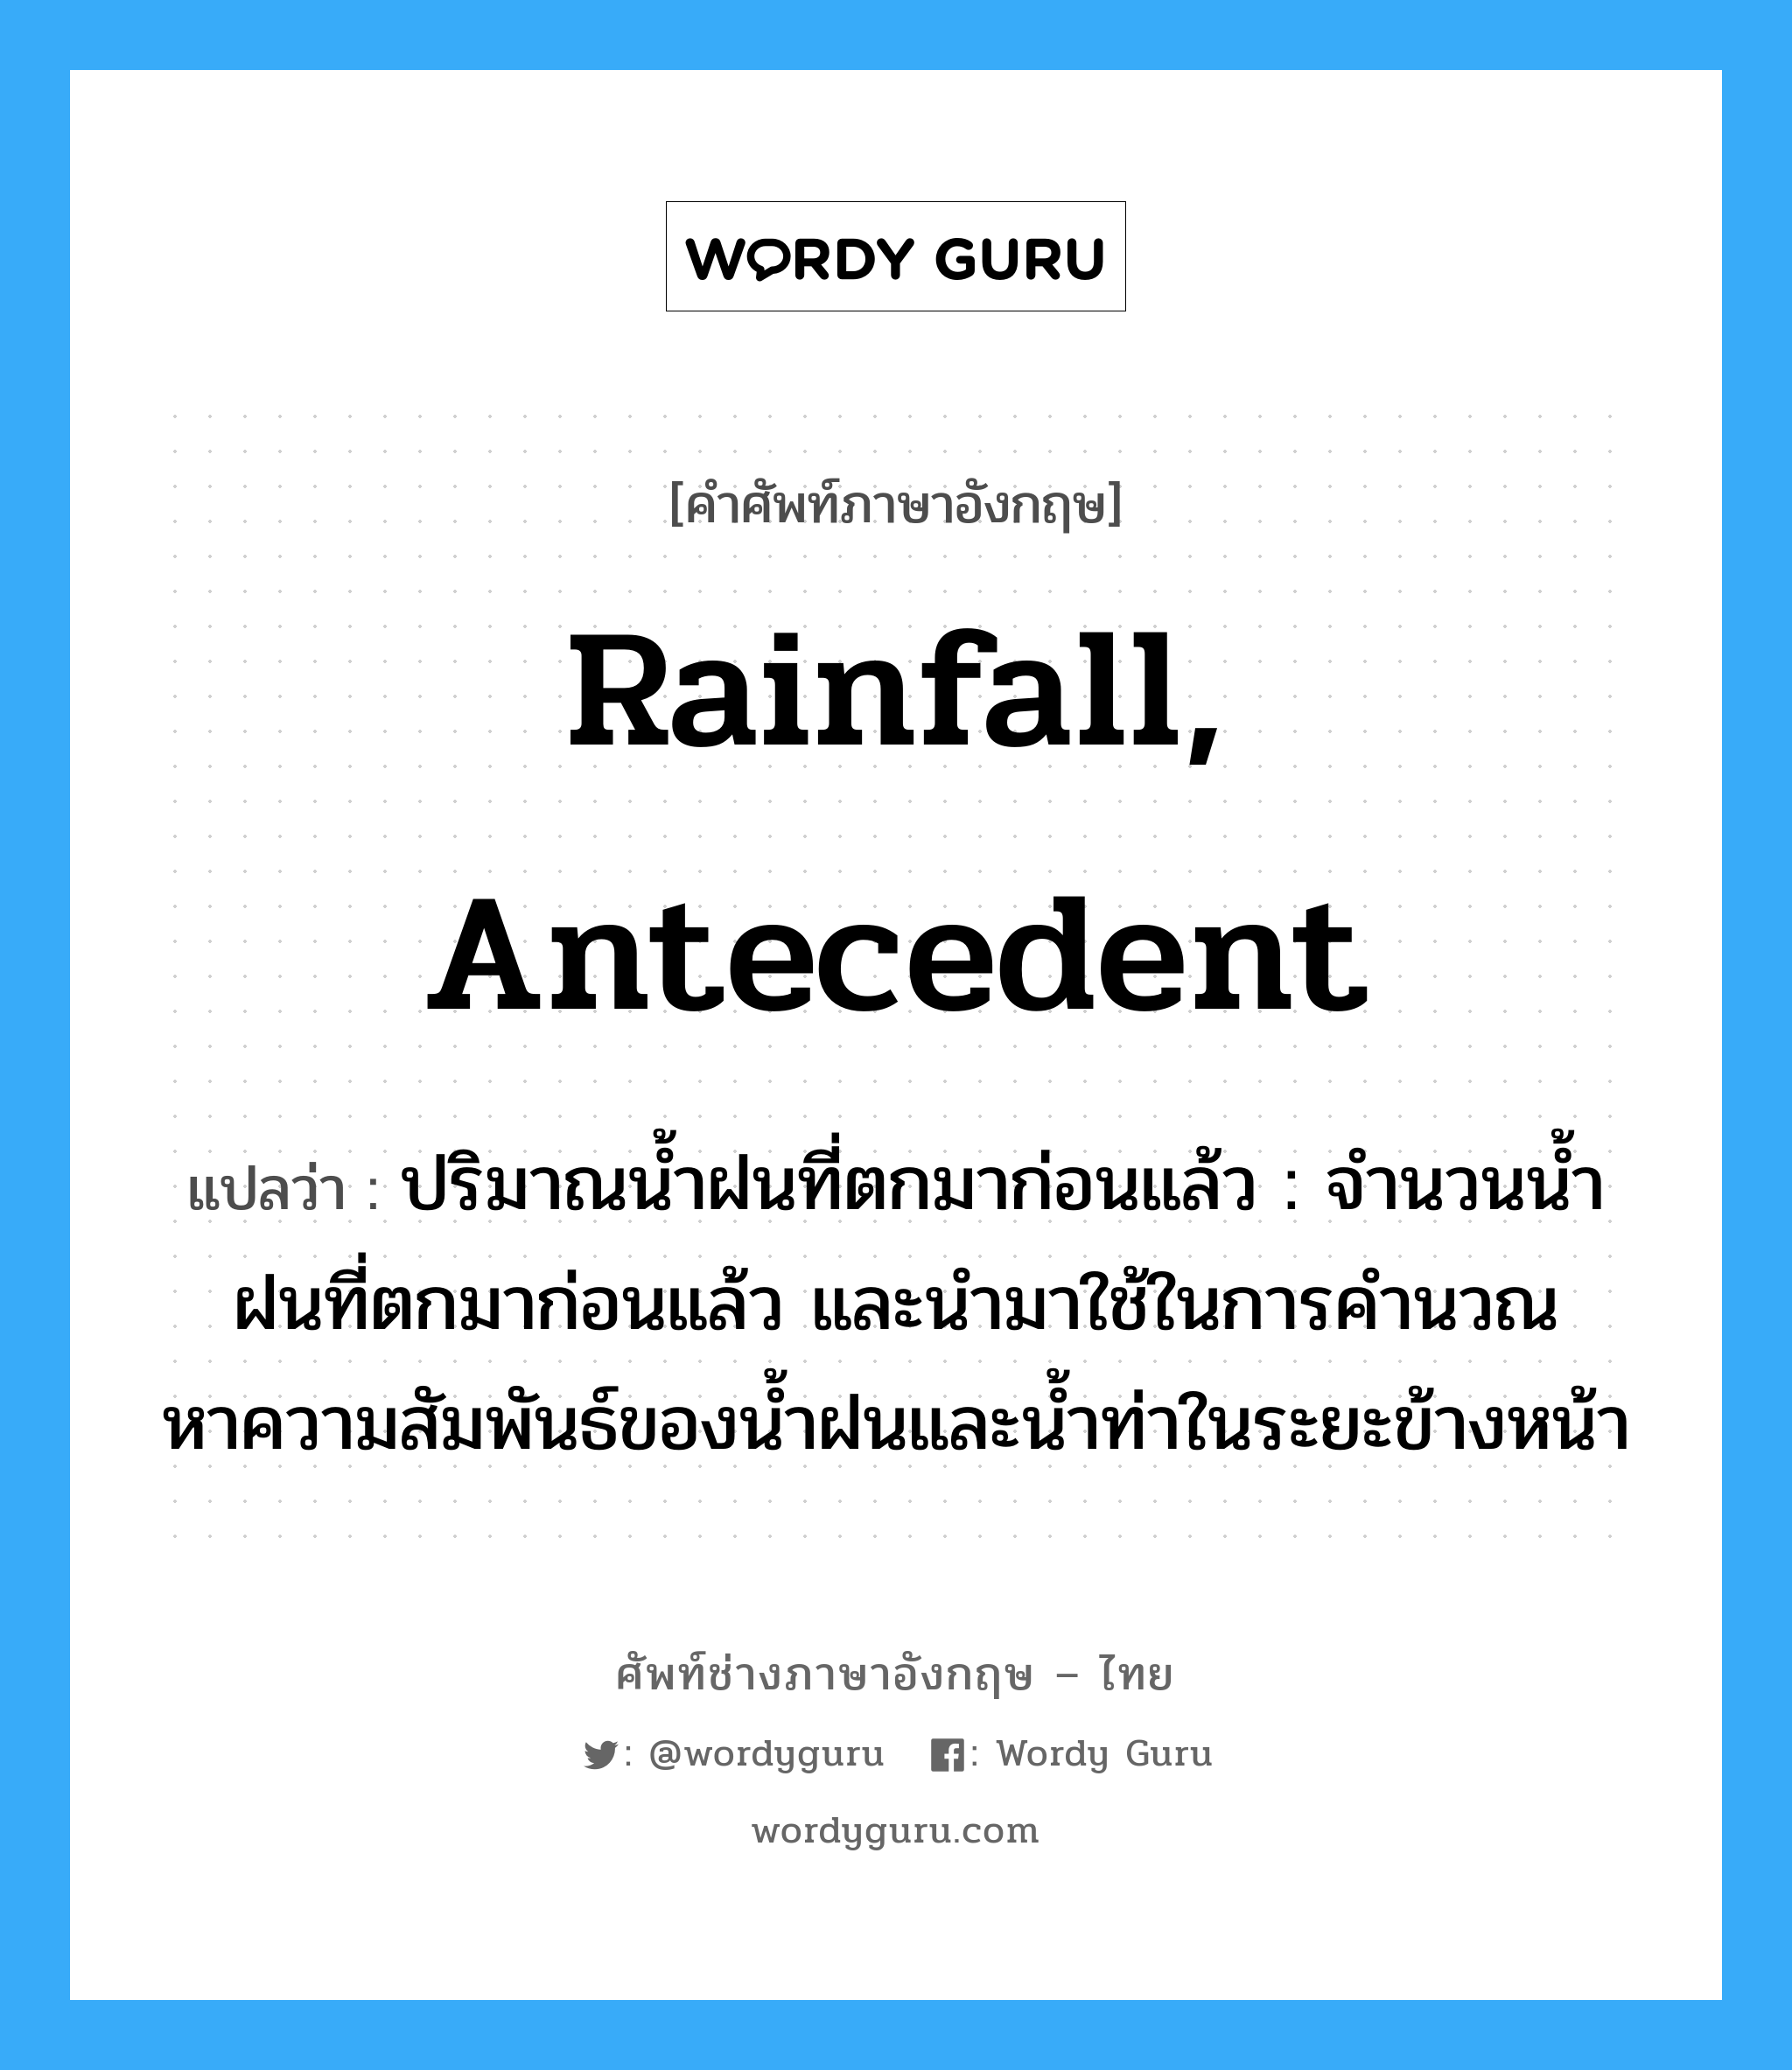 rainfall, antecedent แปลว่า?, คำศัพท์ช่างภาษาอังกฤษ - ไทย rainfall, antecedent คำศัพท์ภาษาอังกฤษ rainfall, antecedent แปลว่า ปริมาณน้ำฝนที่ตกมาก่อนแล้ว : จำนวนน้ำฝนที่ตกมาก่อนแล้ว และนำมาใช้ในการคำนวณหาความสัมพันธ์ของน้ำฝนและน้ำท่าในระยะข้างหน้า